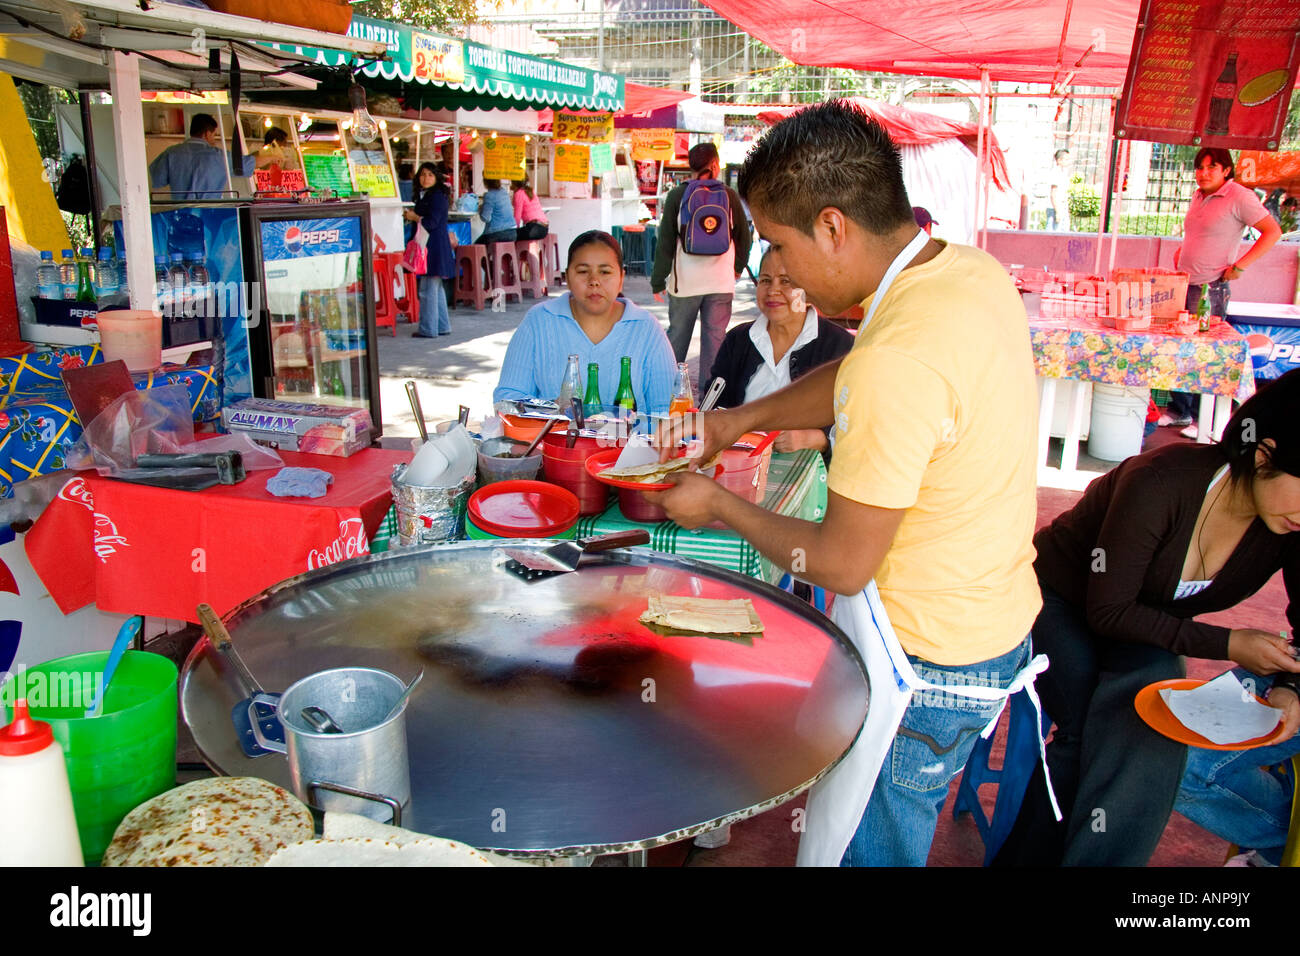 Food vendor making quesadillas in Mexico City Mexico Stock Photo